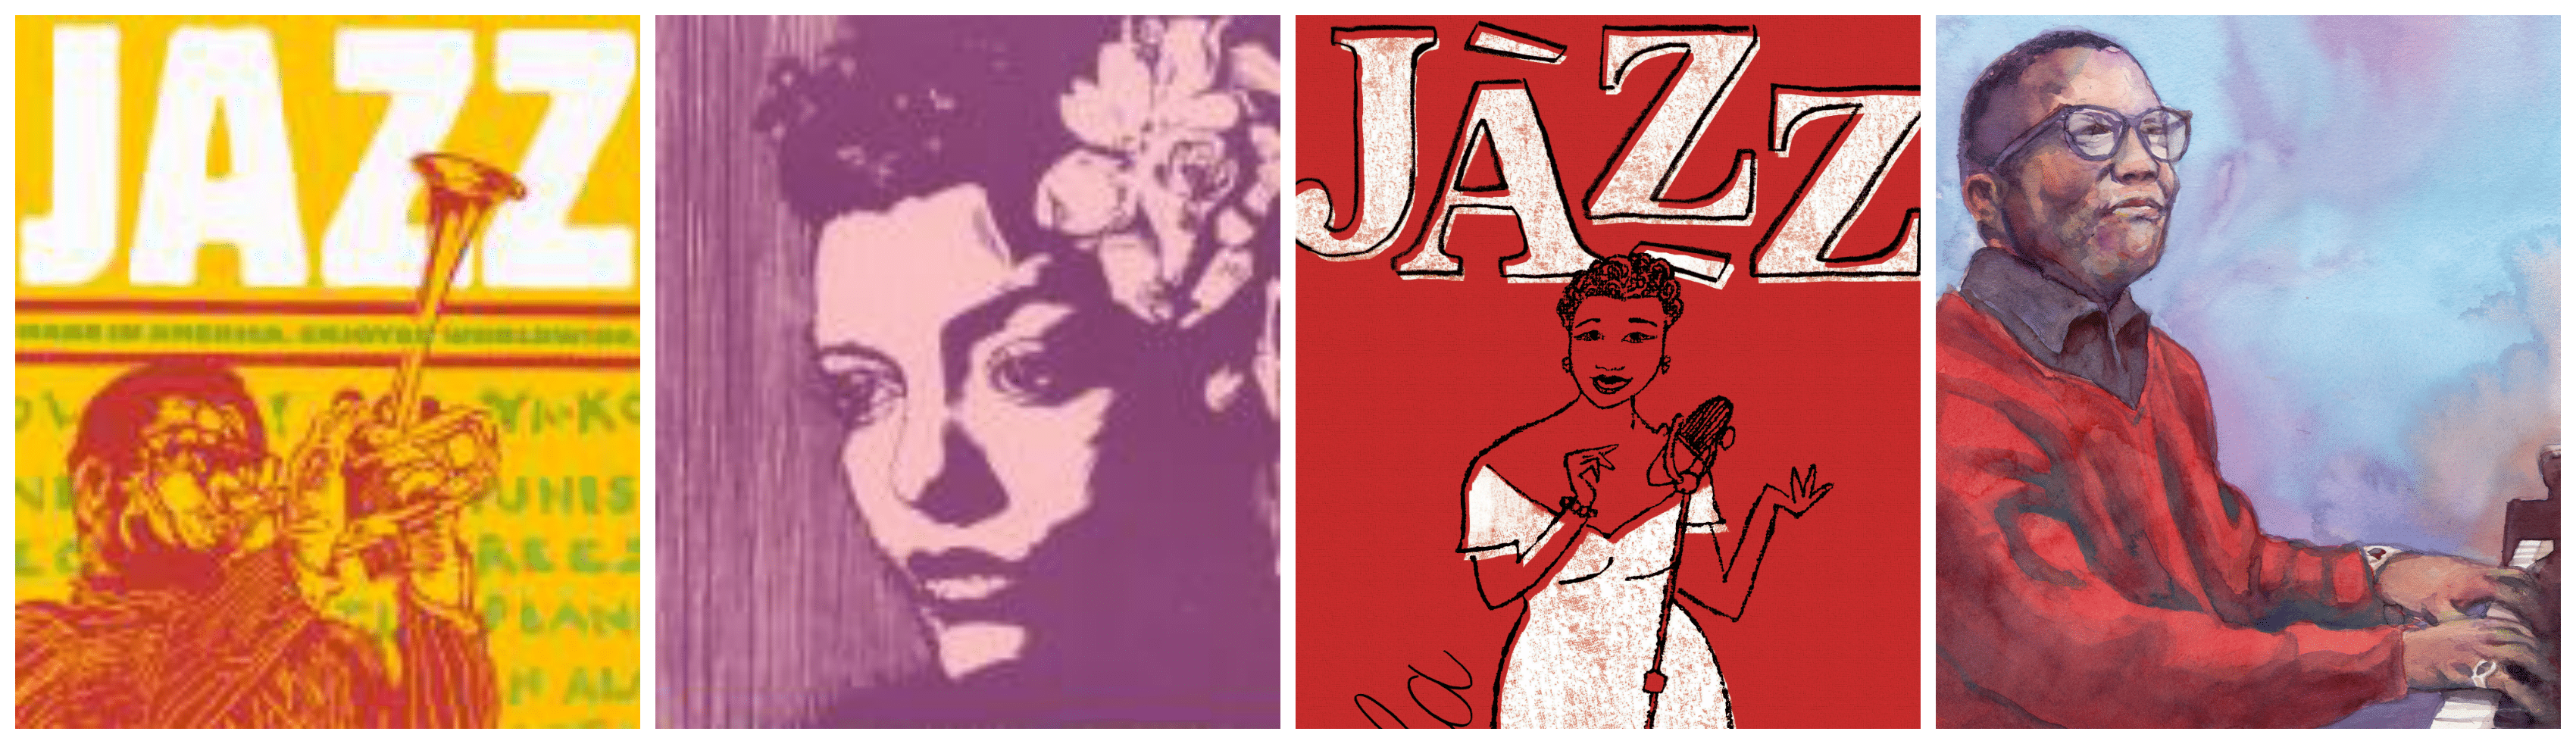 Free Jazz Appreciation Month Poster